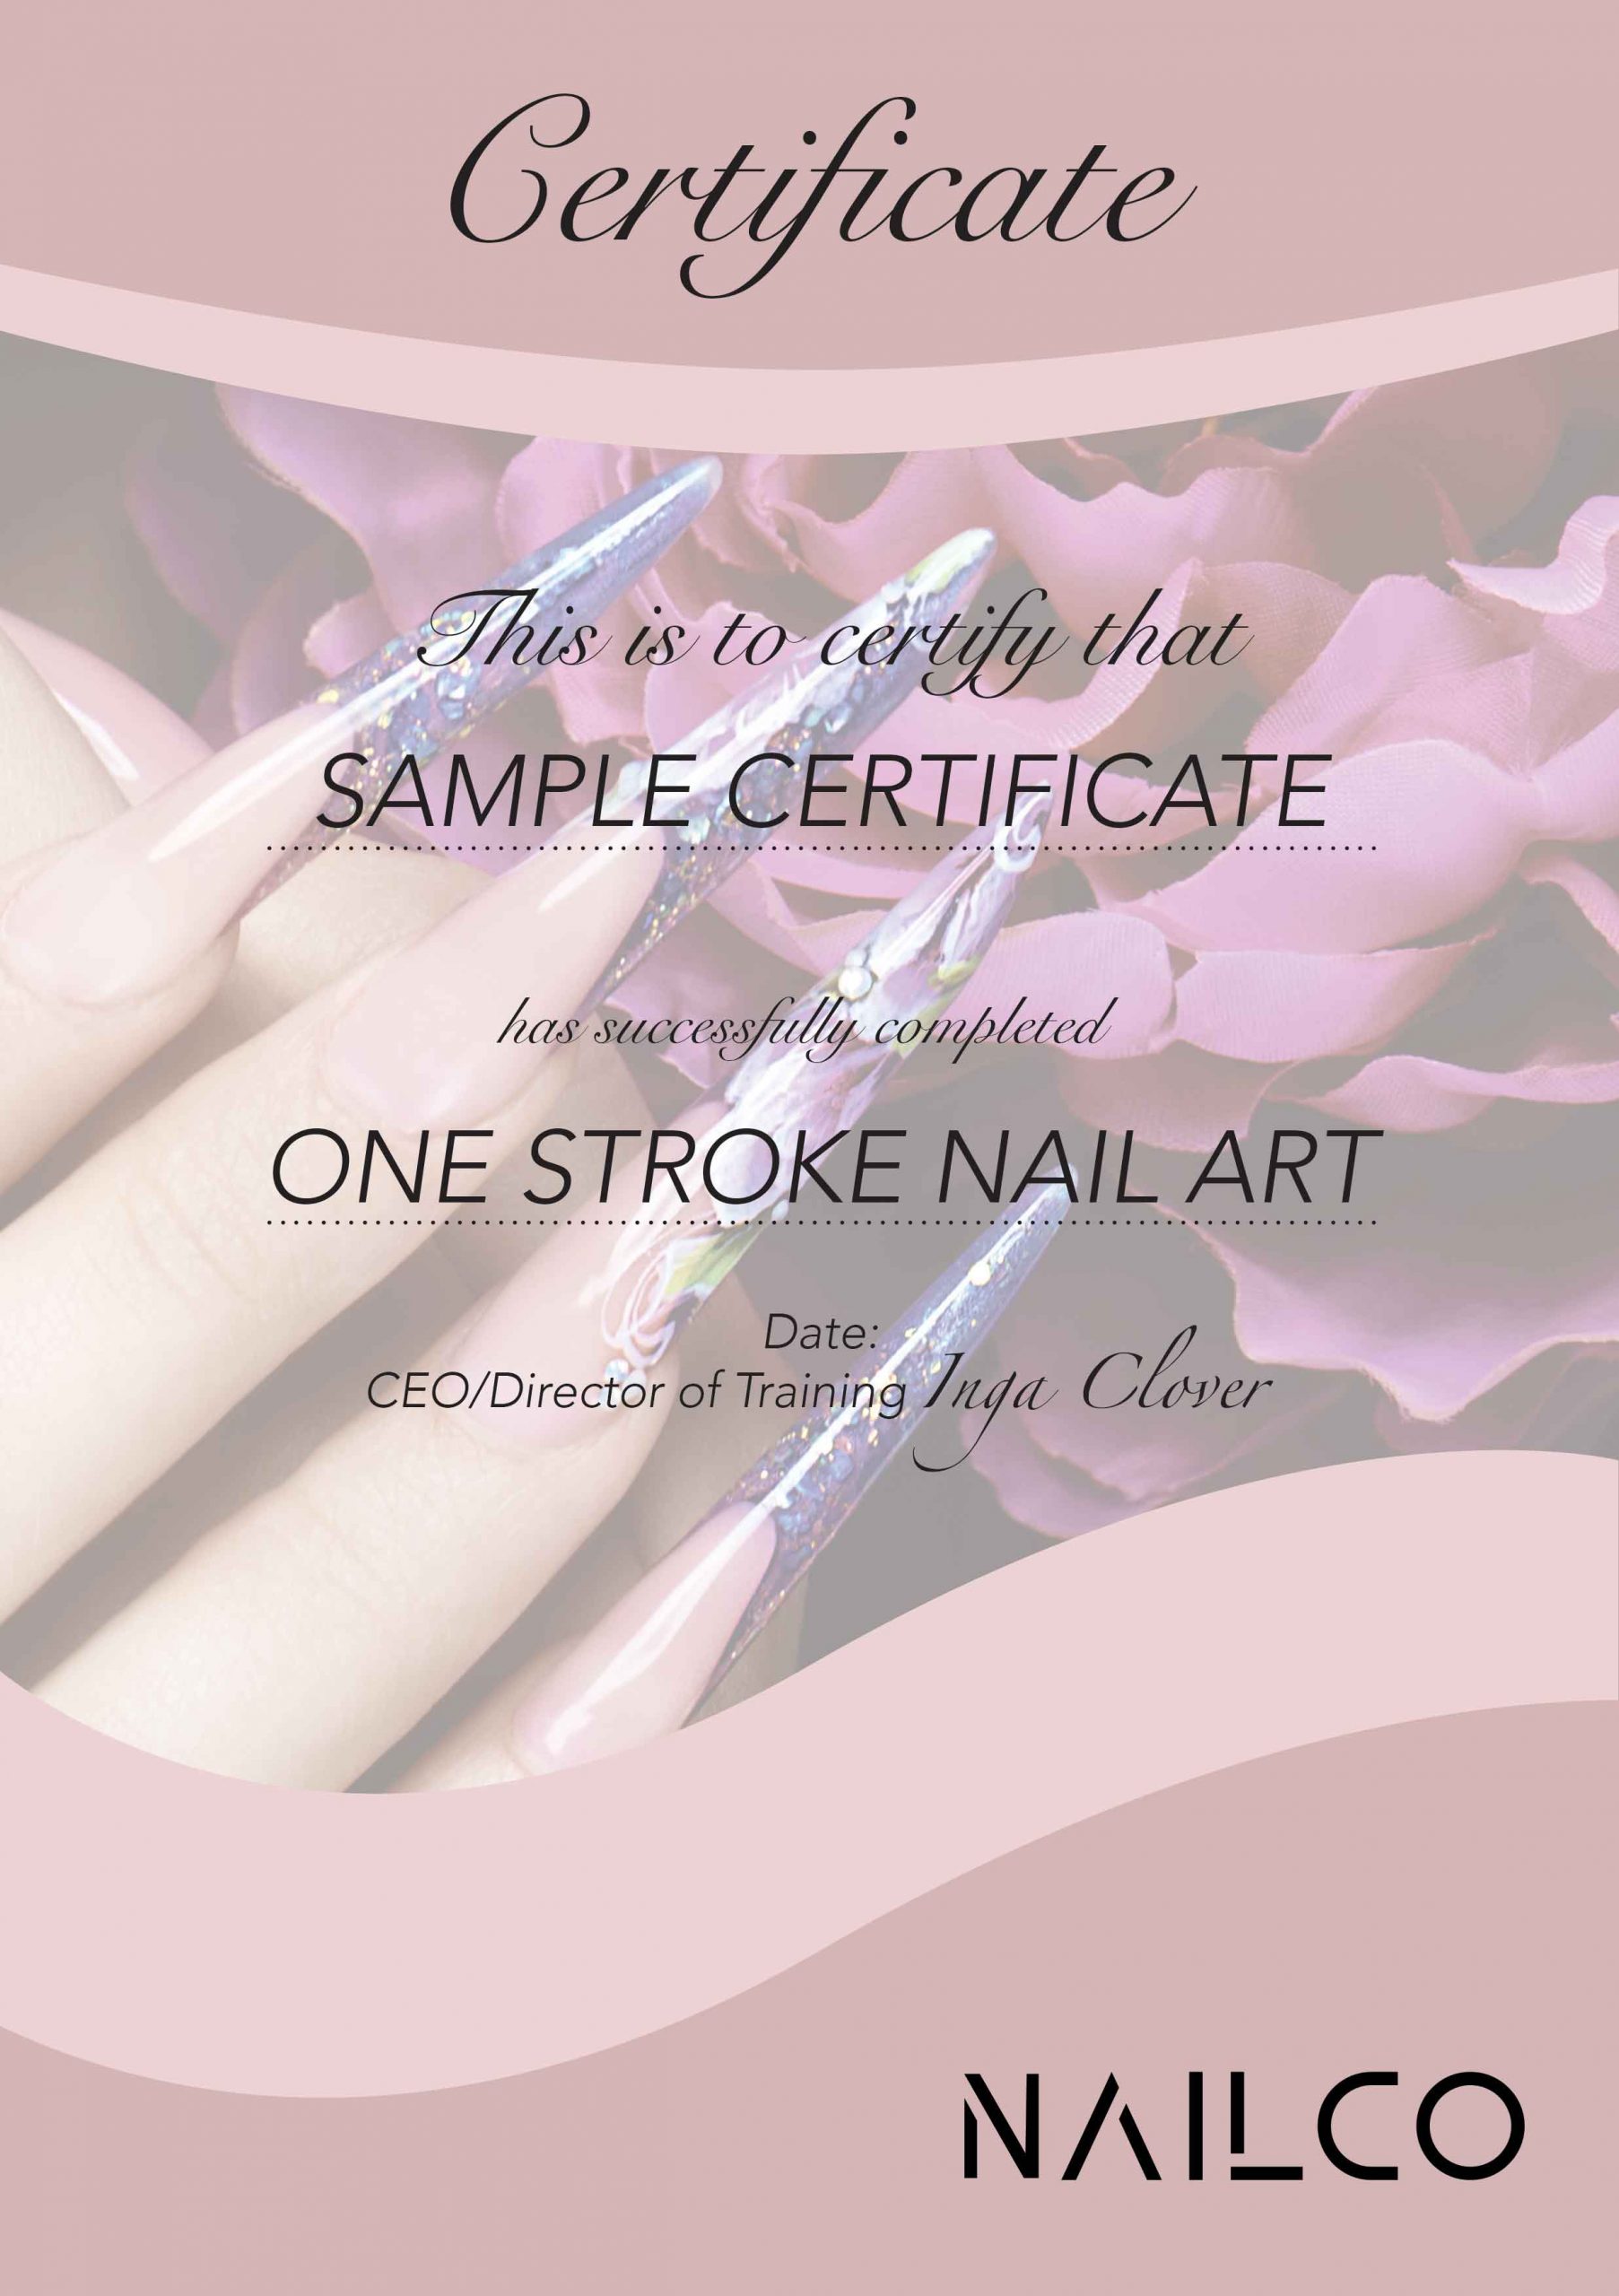 One Stroke Nail Art Course – Nailco International